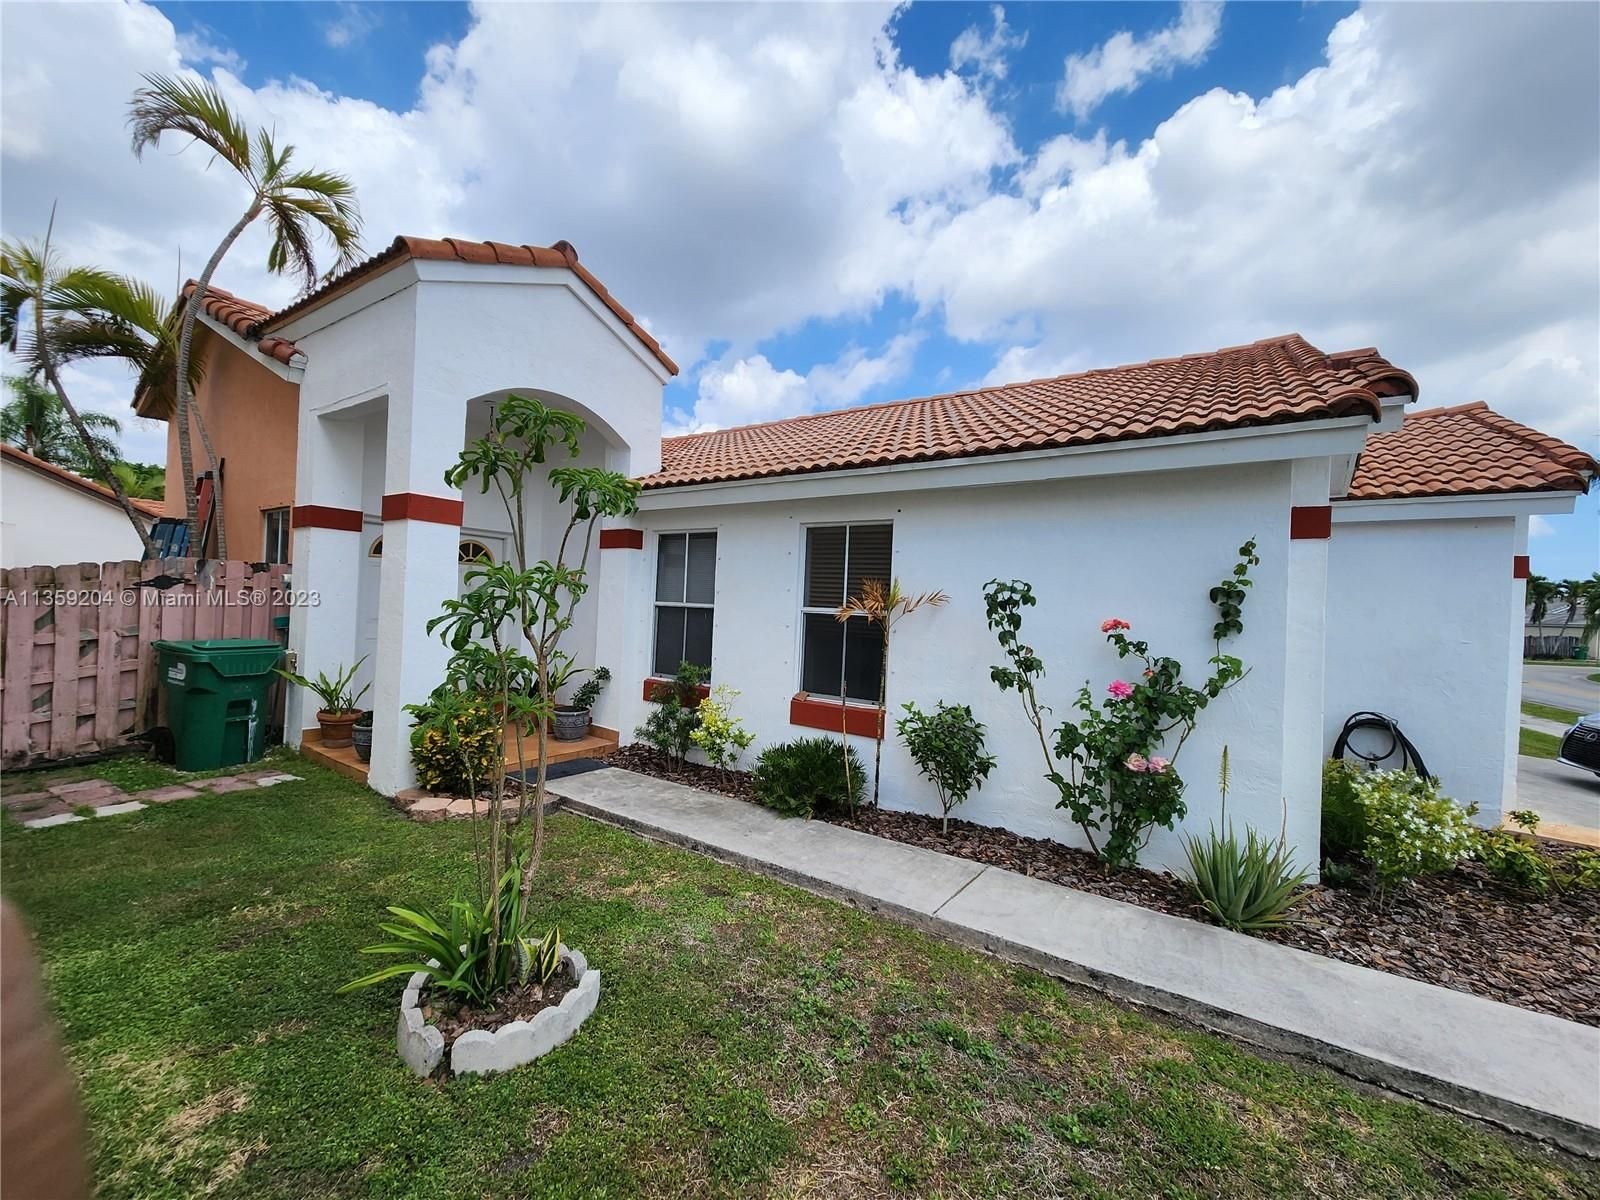 Real estate property located at 14311 90th Ter, Miami-Dade County, Miami, FL